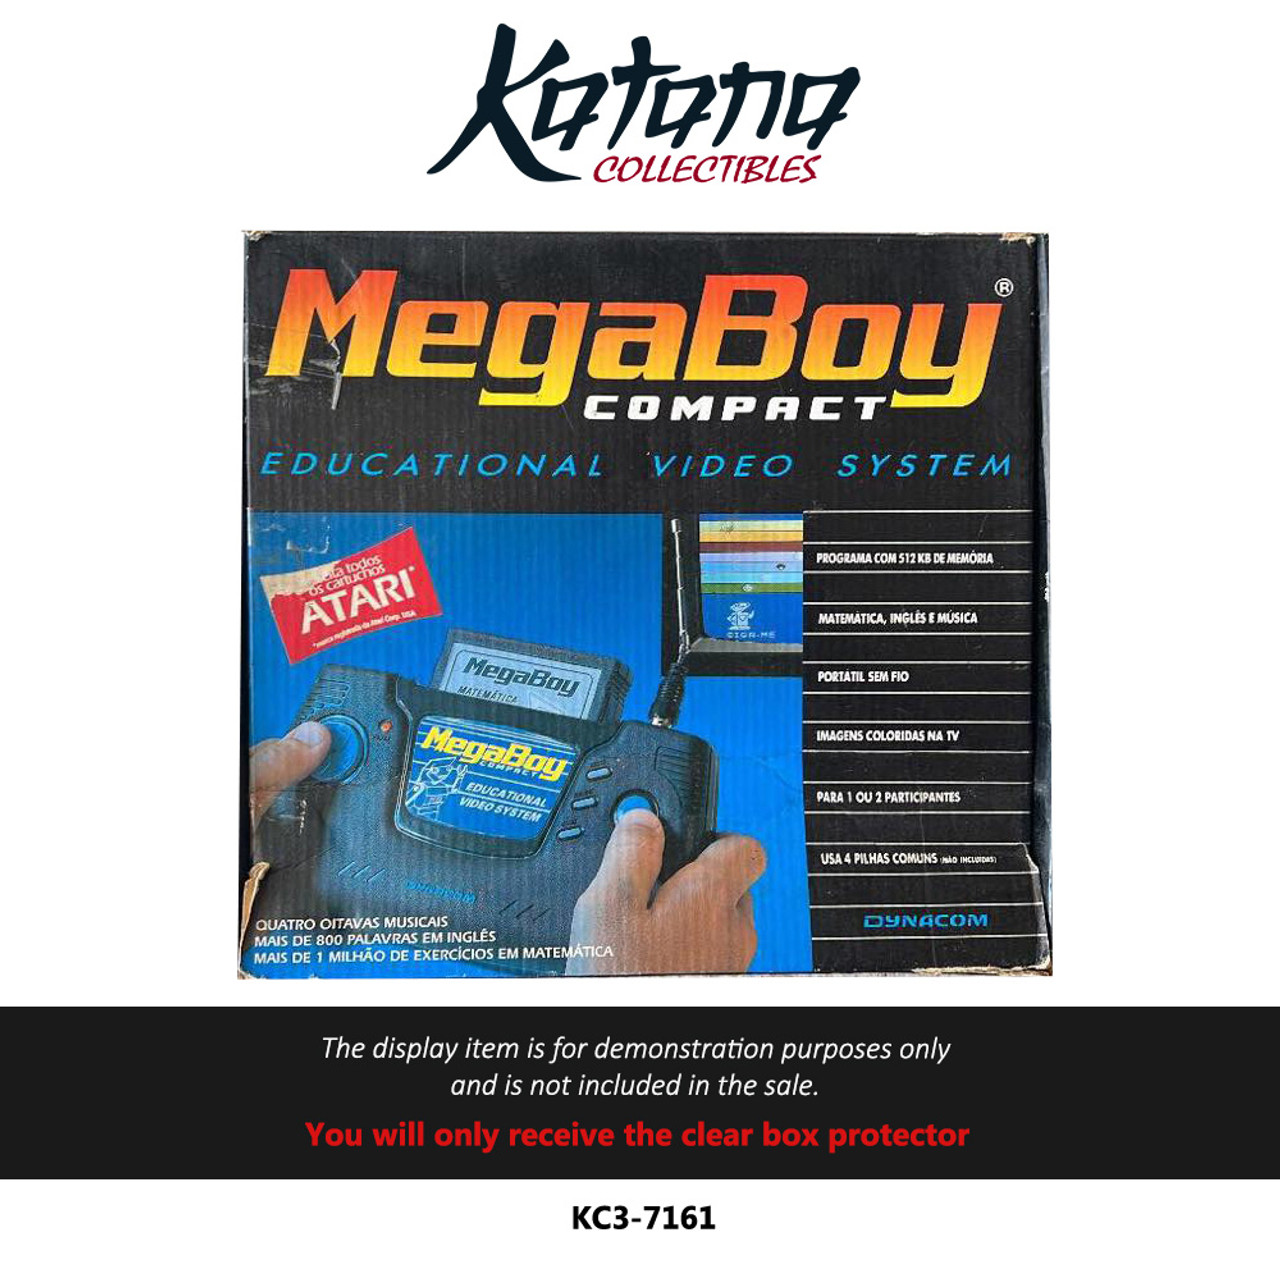 Katana Collectibles Protector For Compact Educational Video System Megaboy (Atari 2600 Compatible)